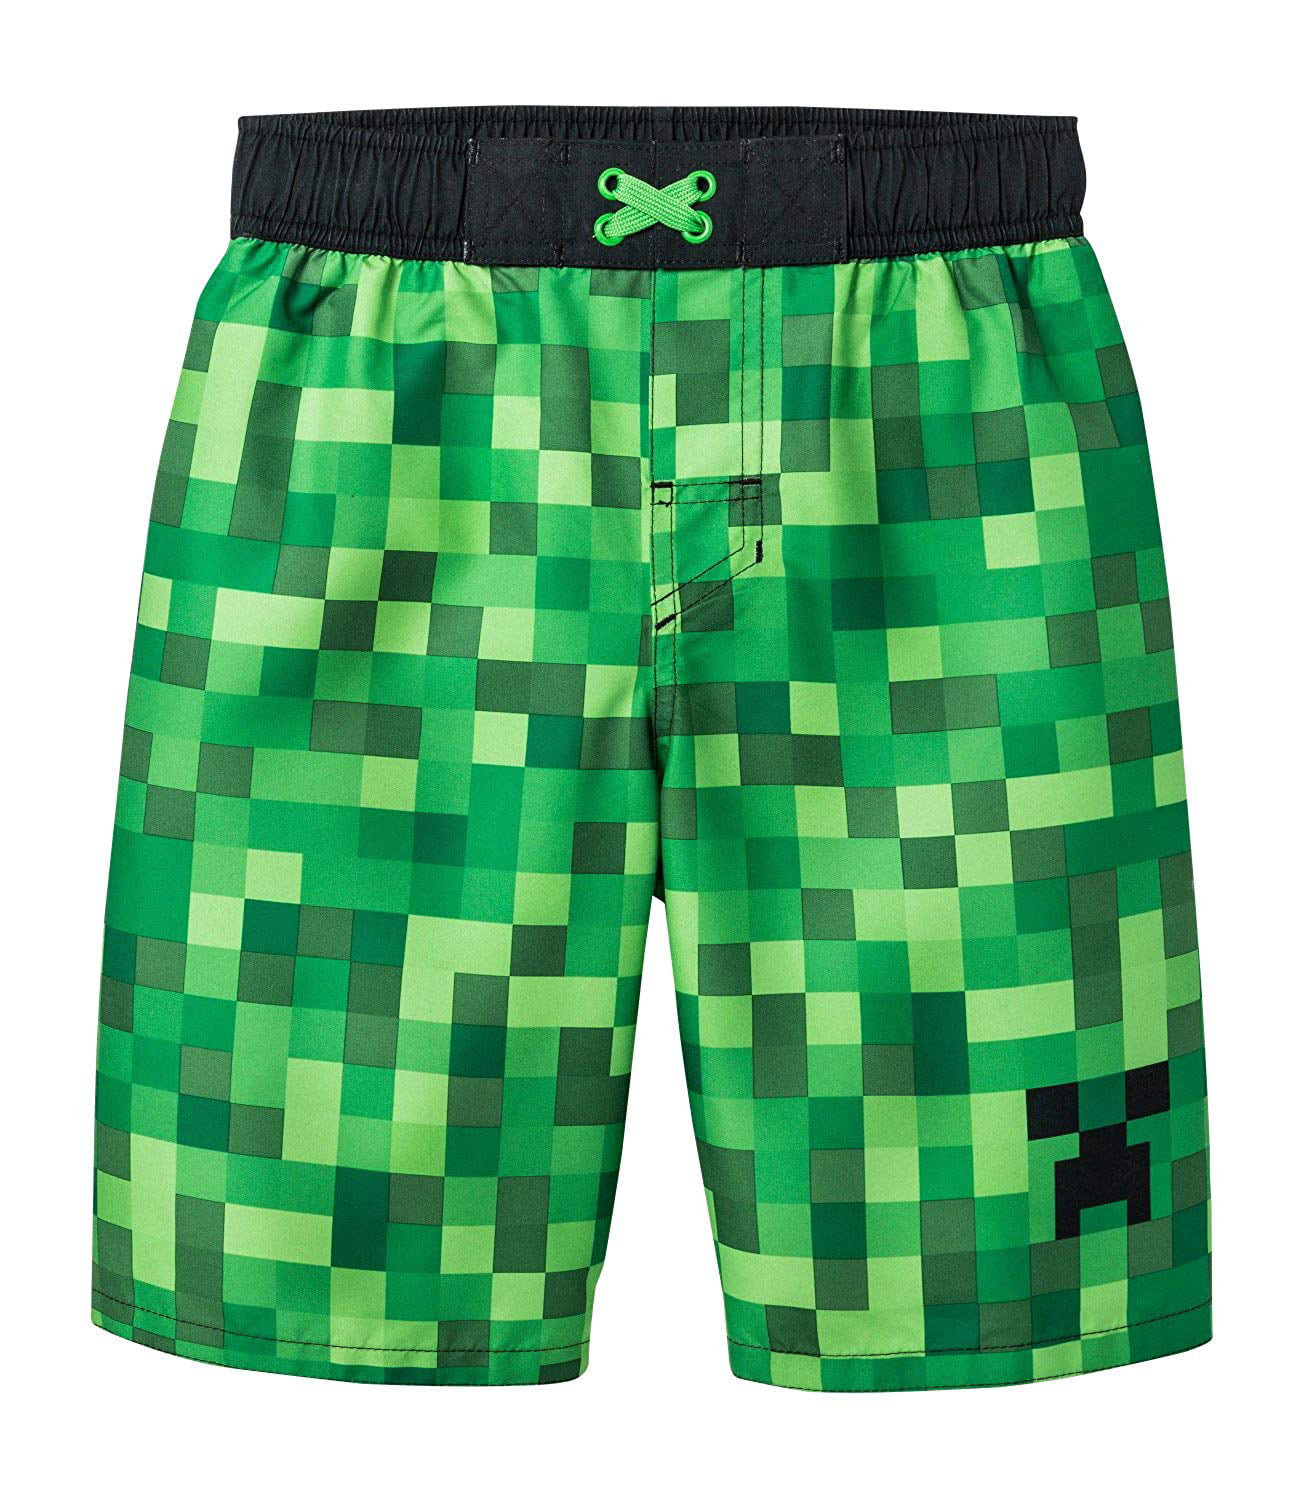 Mojang - Minecraft Big Boys Swim Trunk,Green, Black,S (6/7), Novelty ...